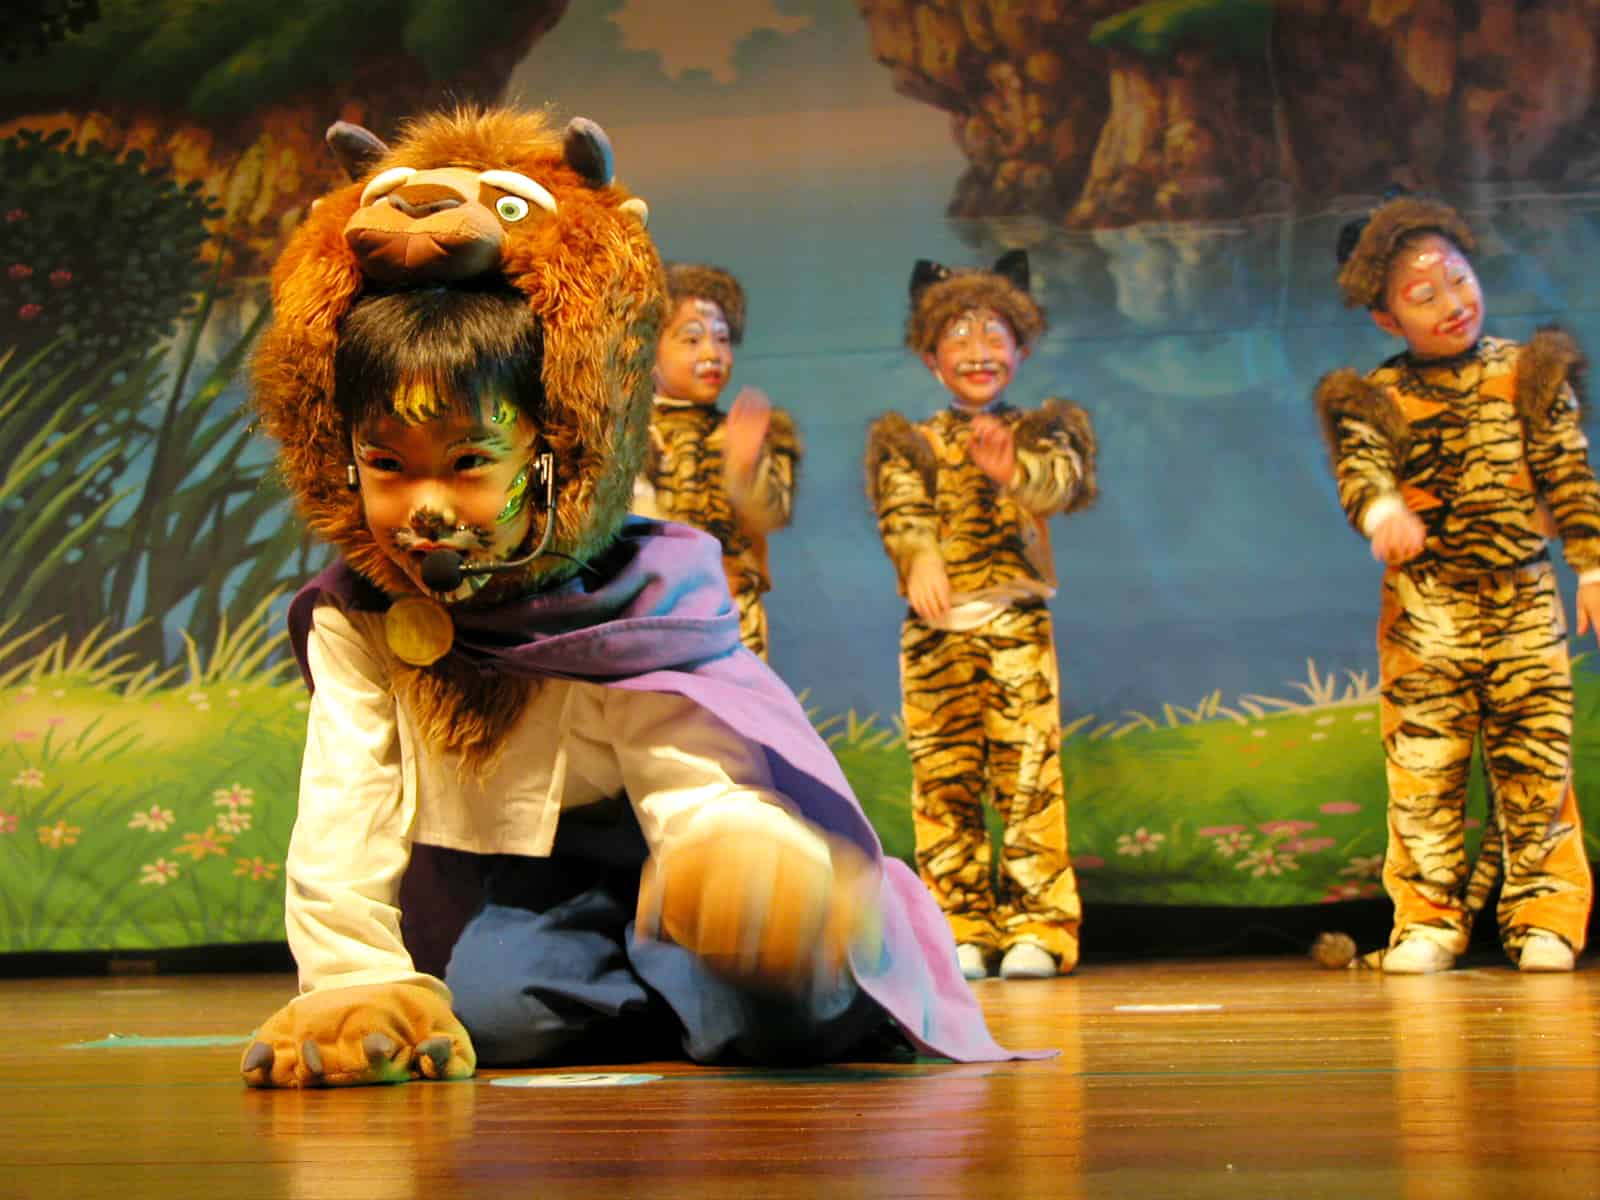 2005.12.10-Performance3-LionKing - Musical English - early childhood learning program